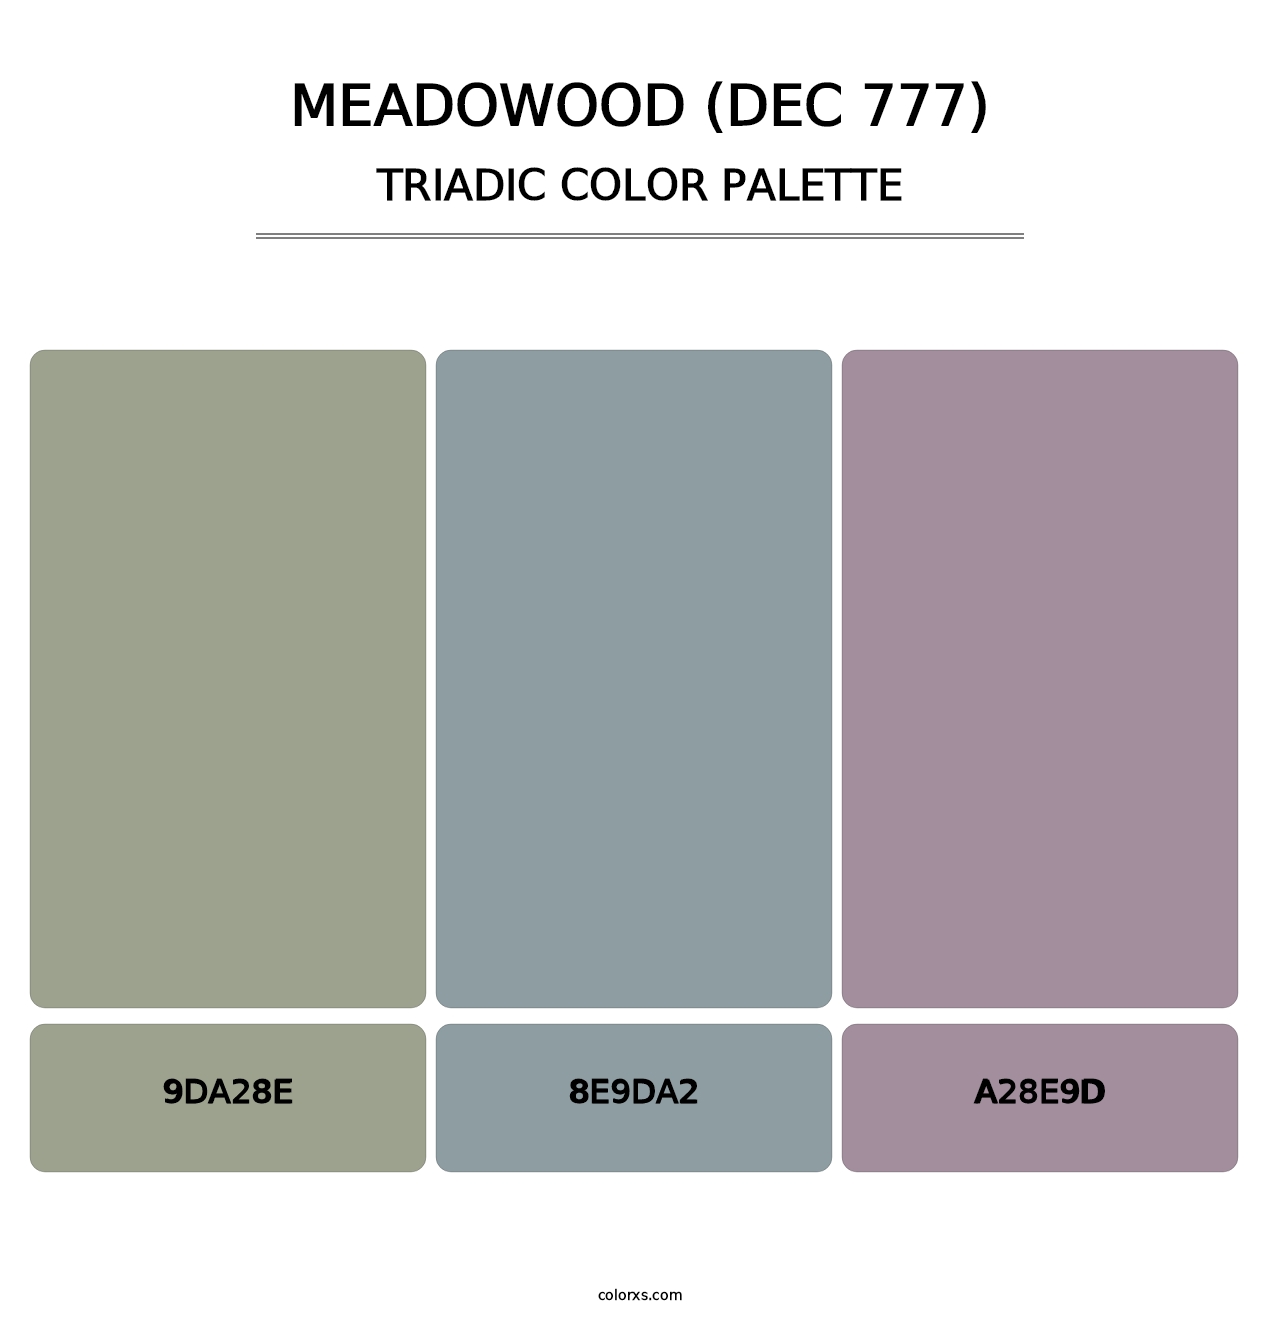 Meadowood (DEC 777) - Triadic Color Palette